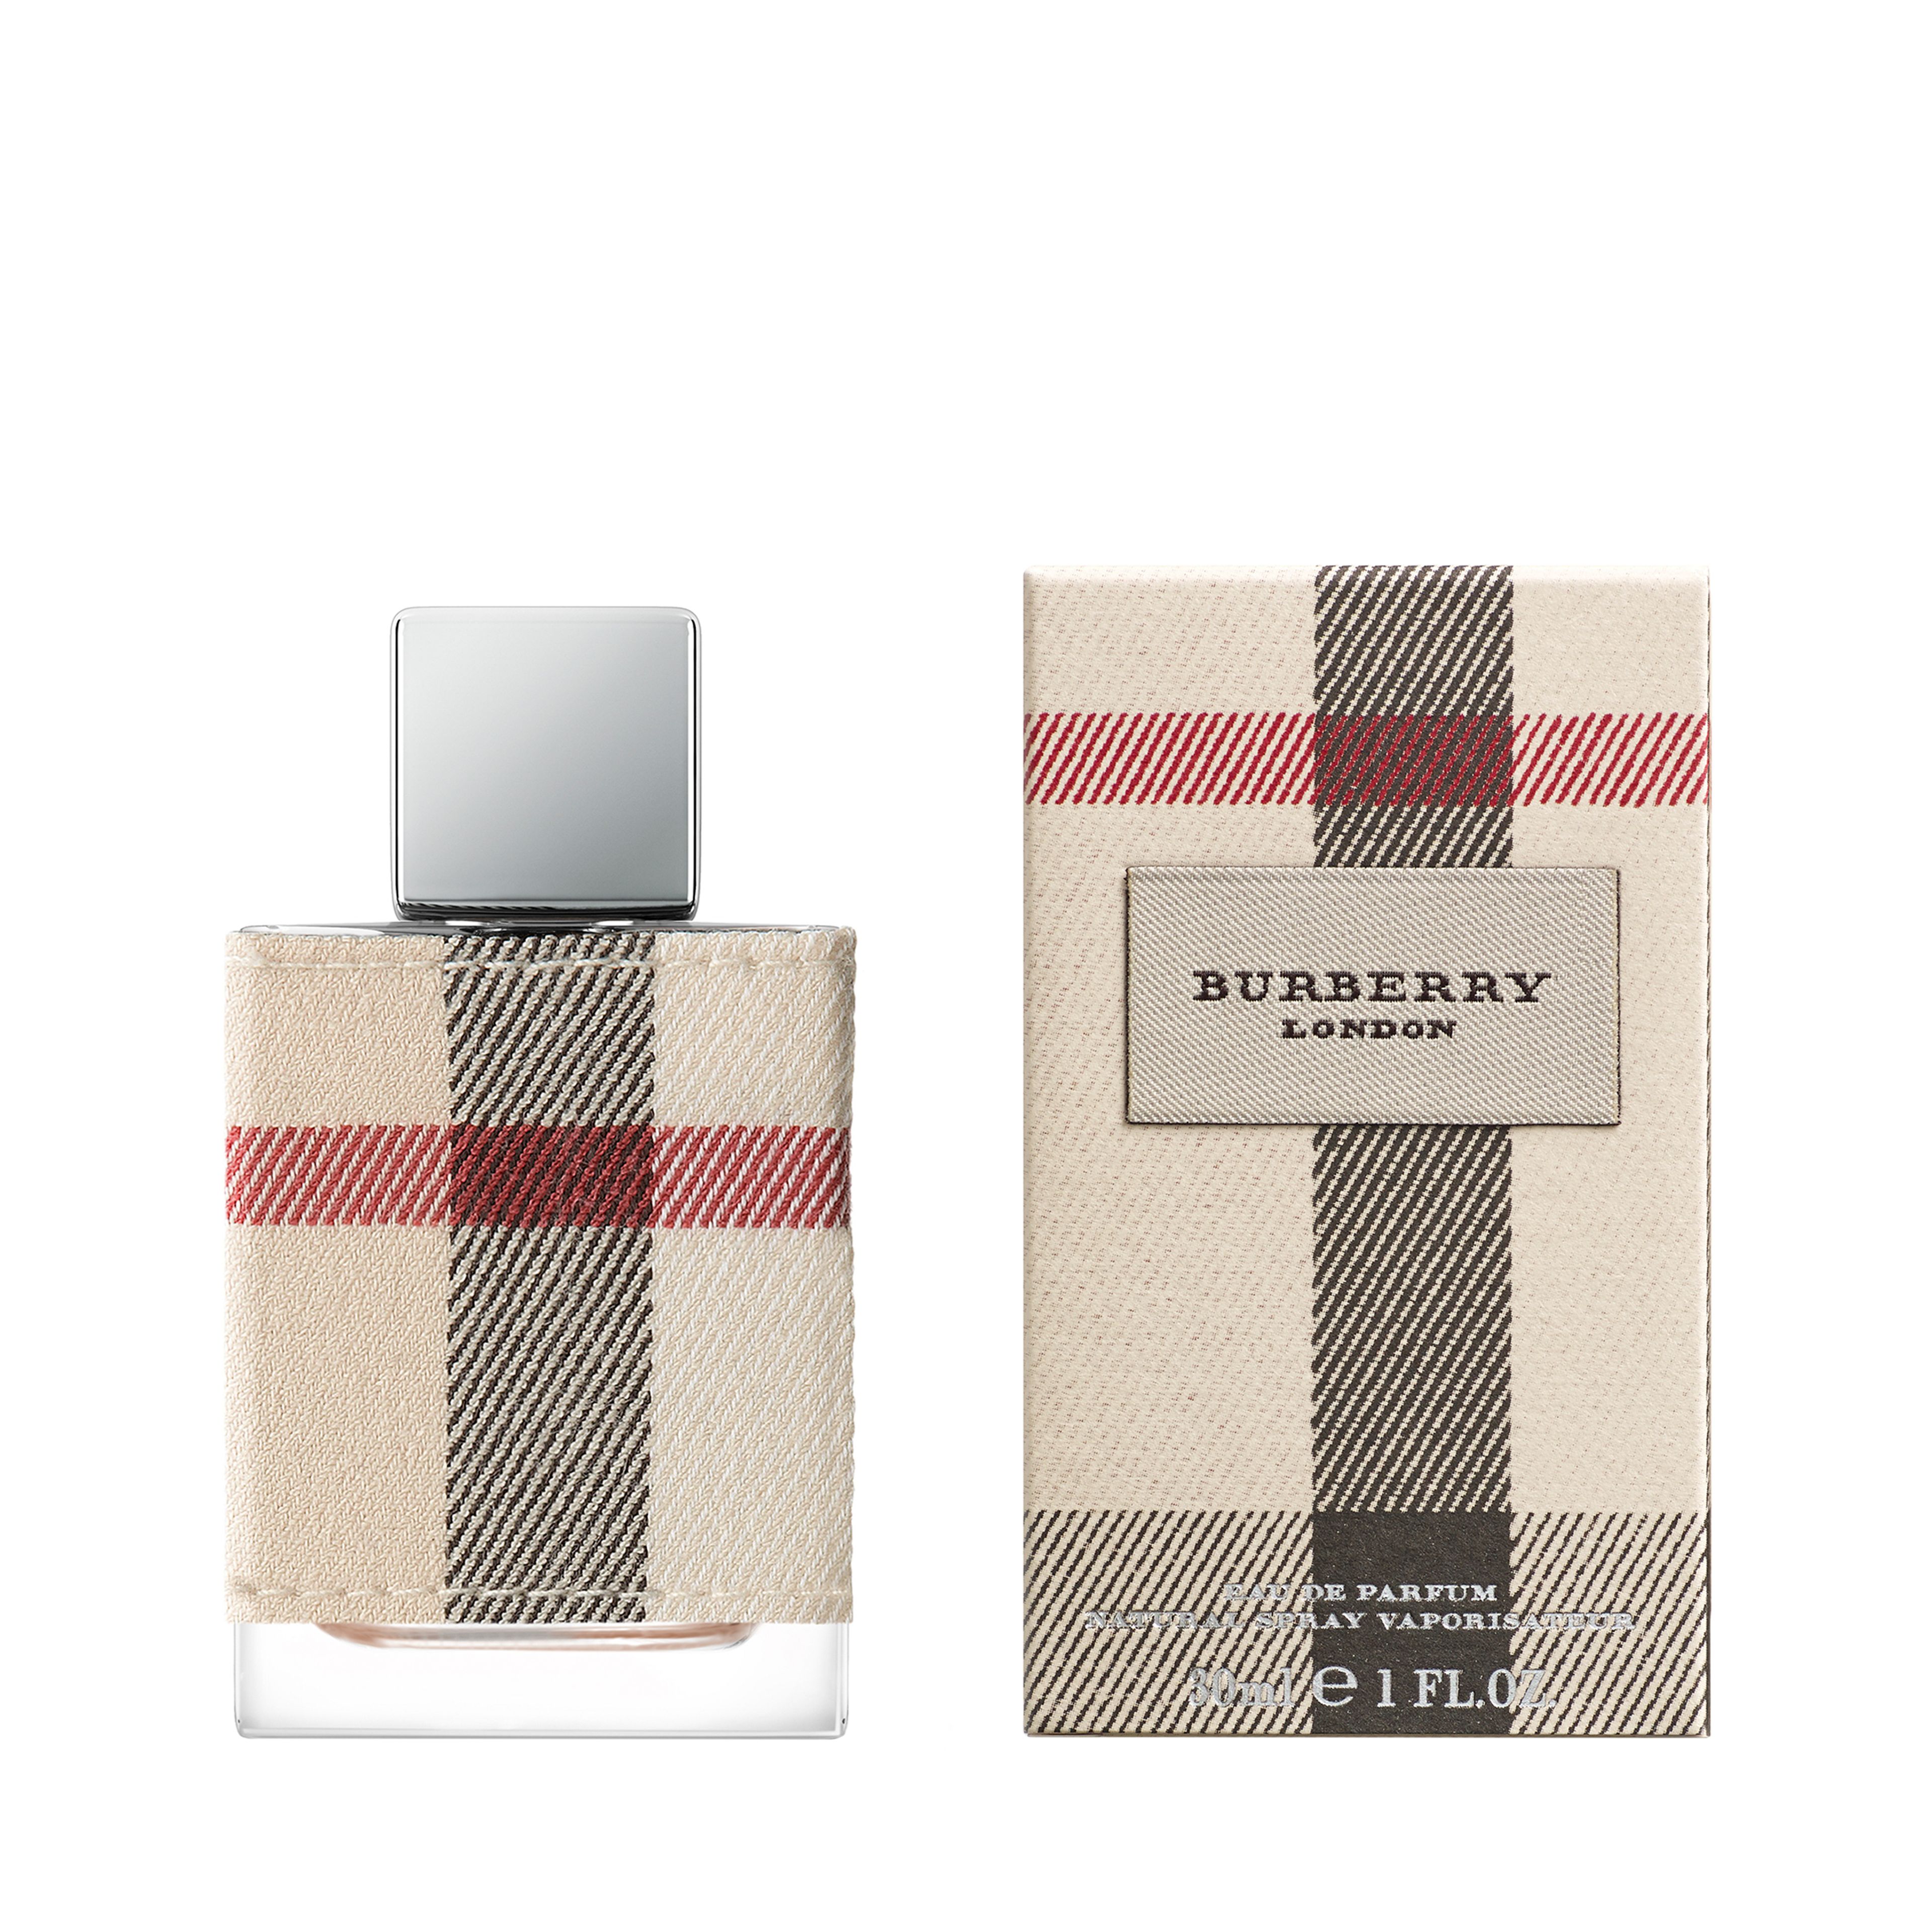 Burberry Burberry London Eau De Parfum 2